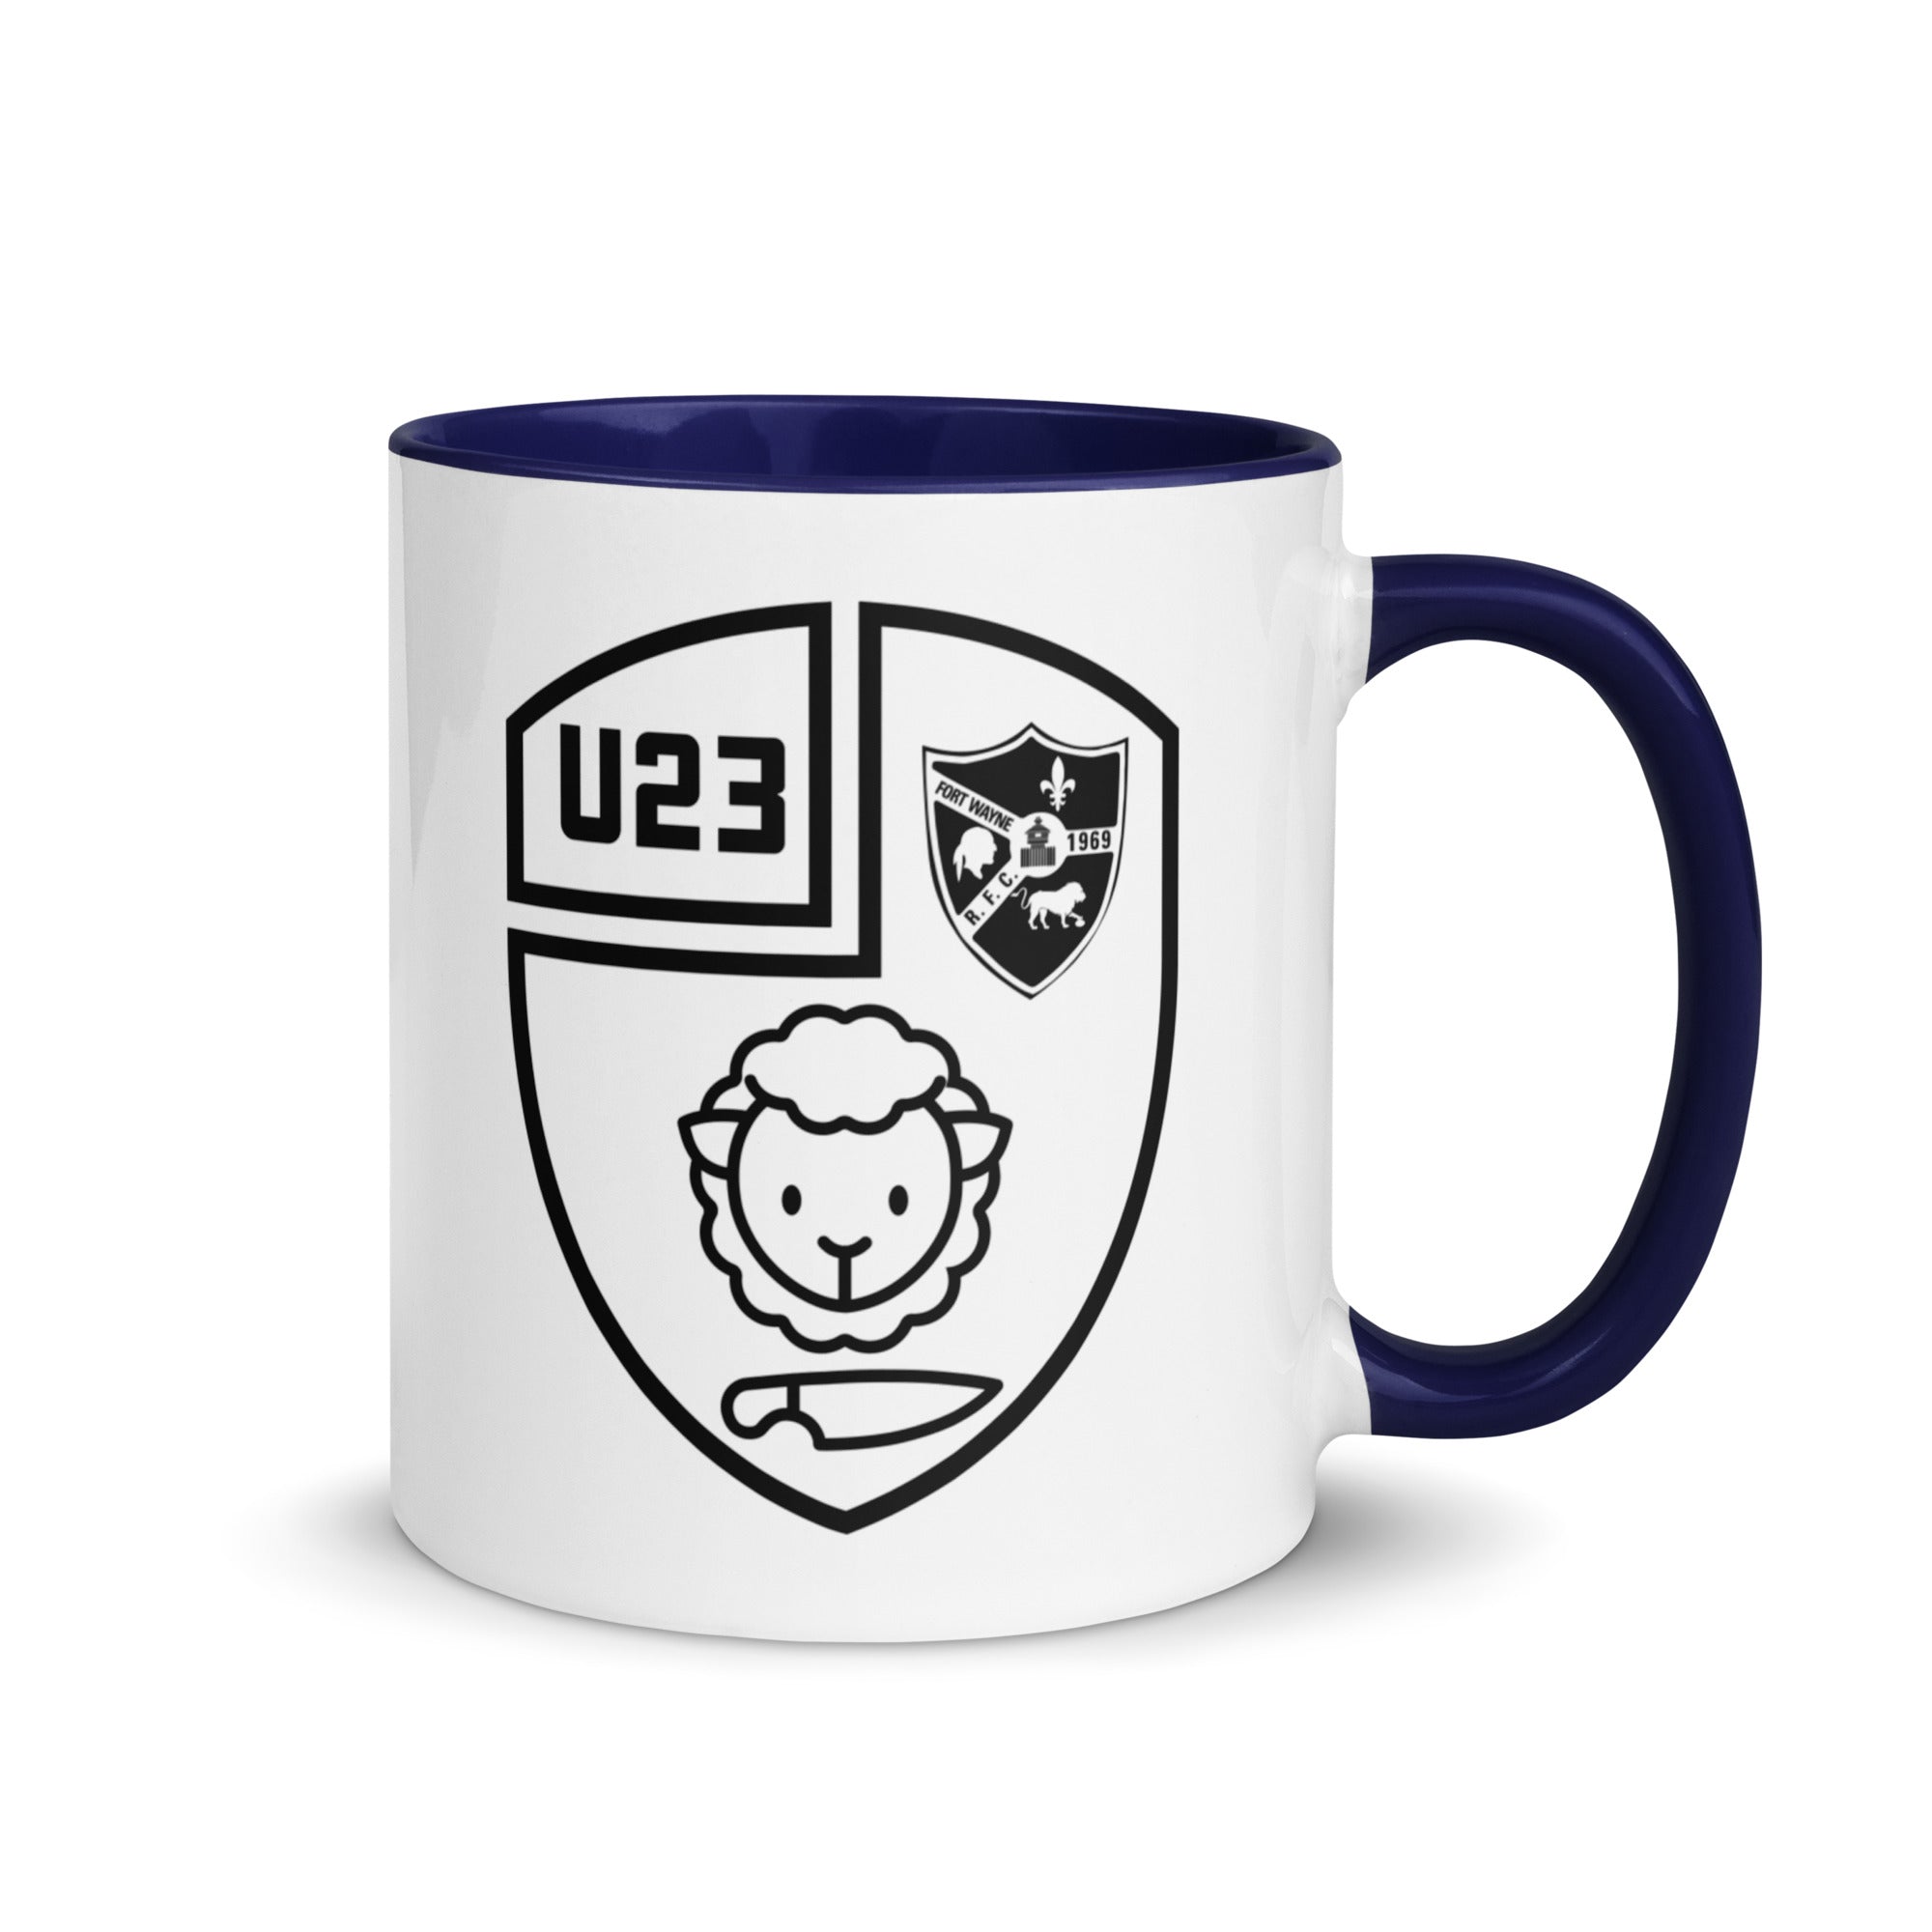 Rugby Imports Black & Blue U23 Ceramic Mug